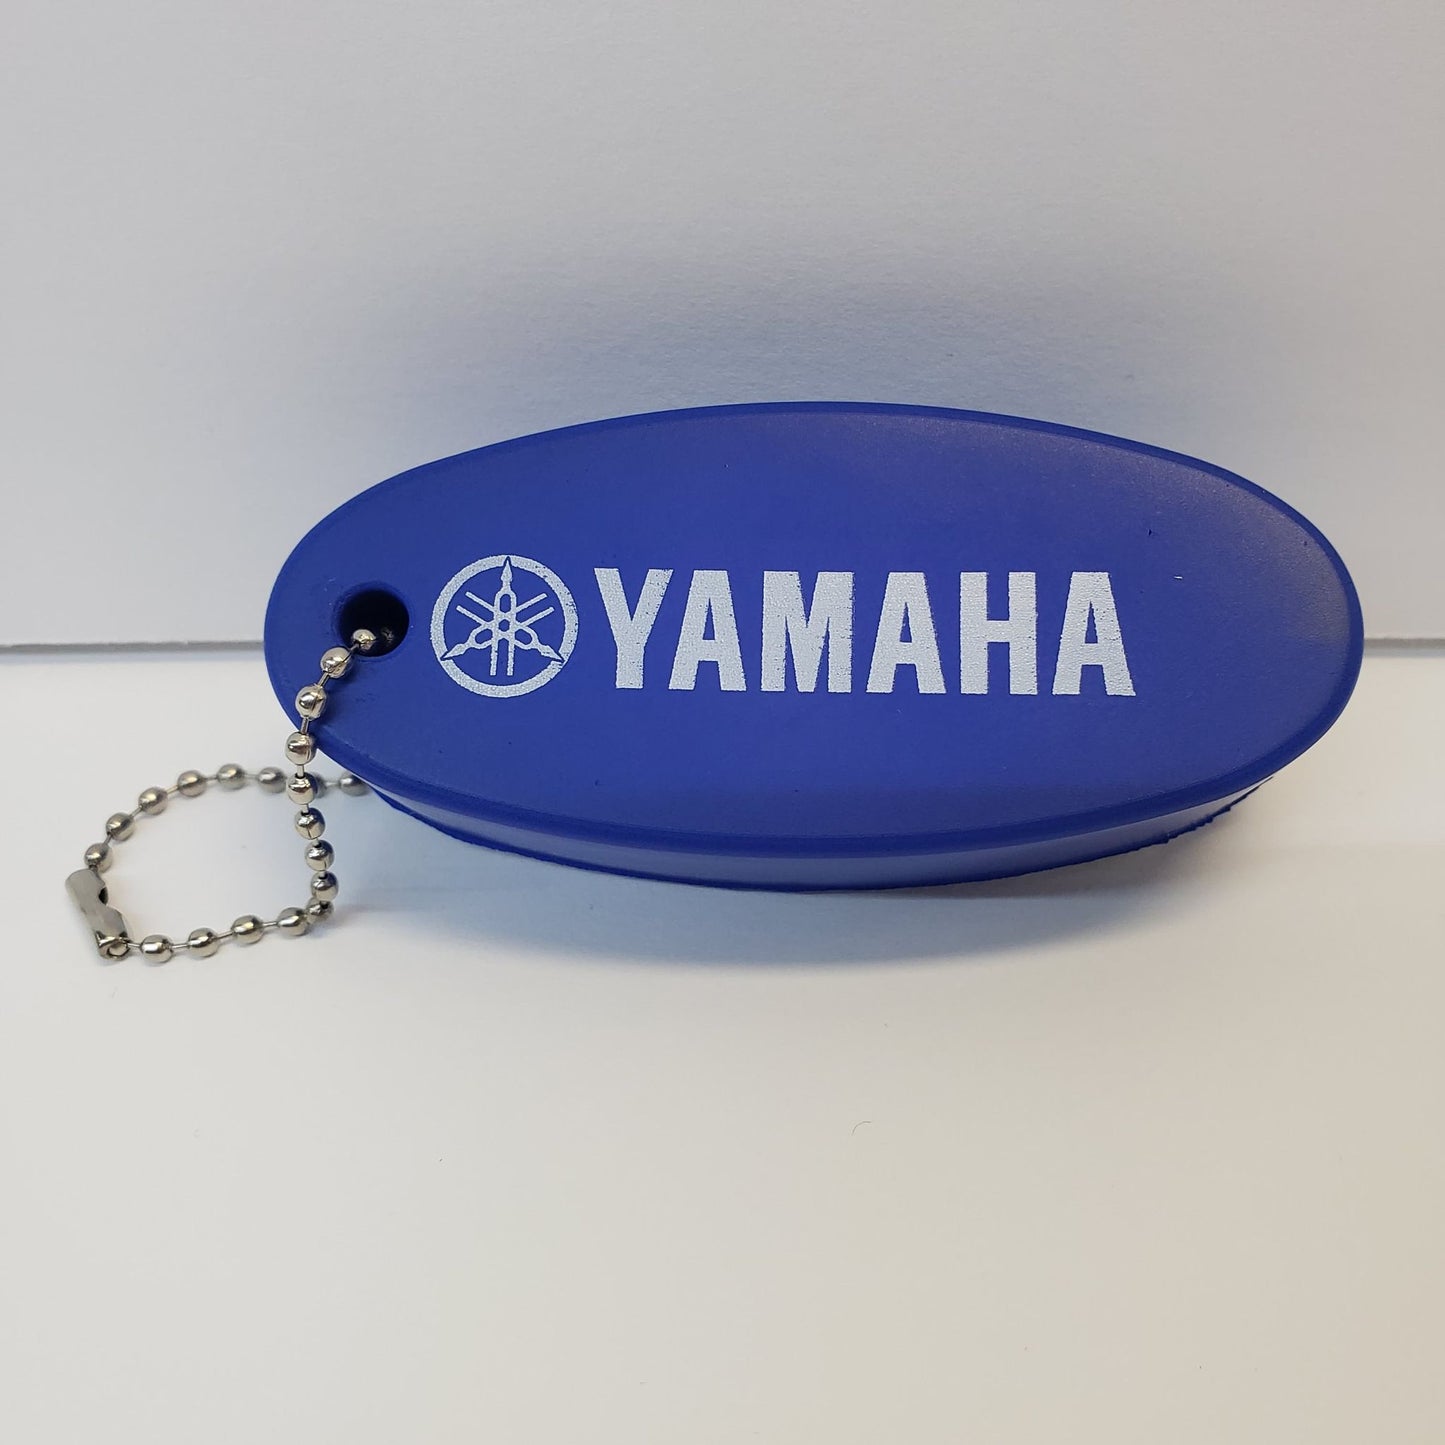 New Authentic Yamaha Floaty Key Chain-Blue